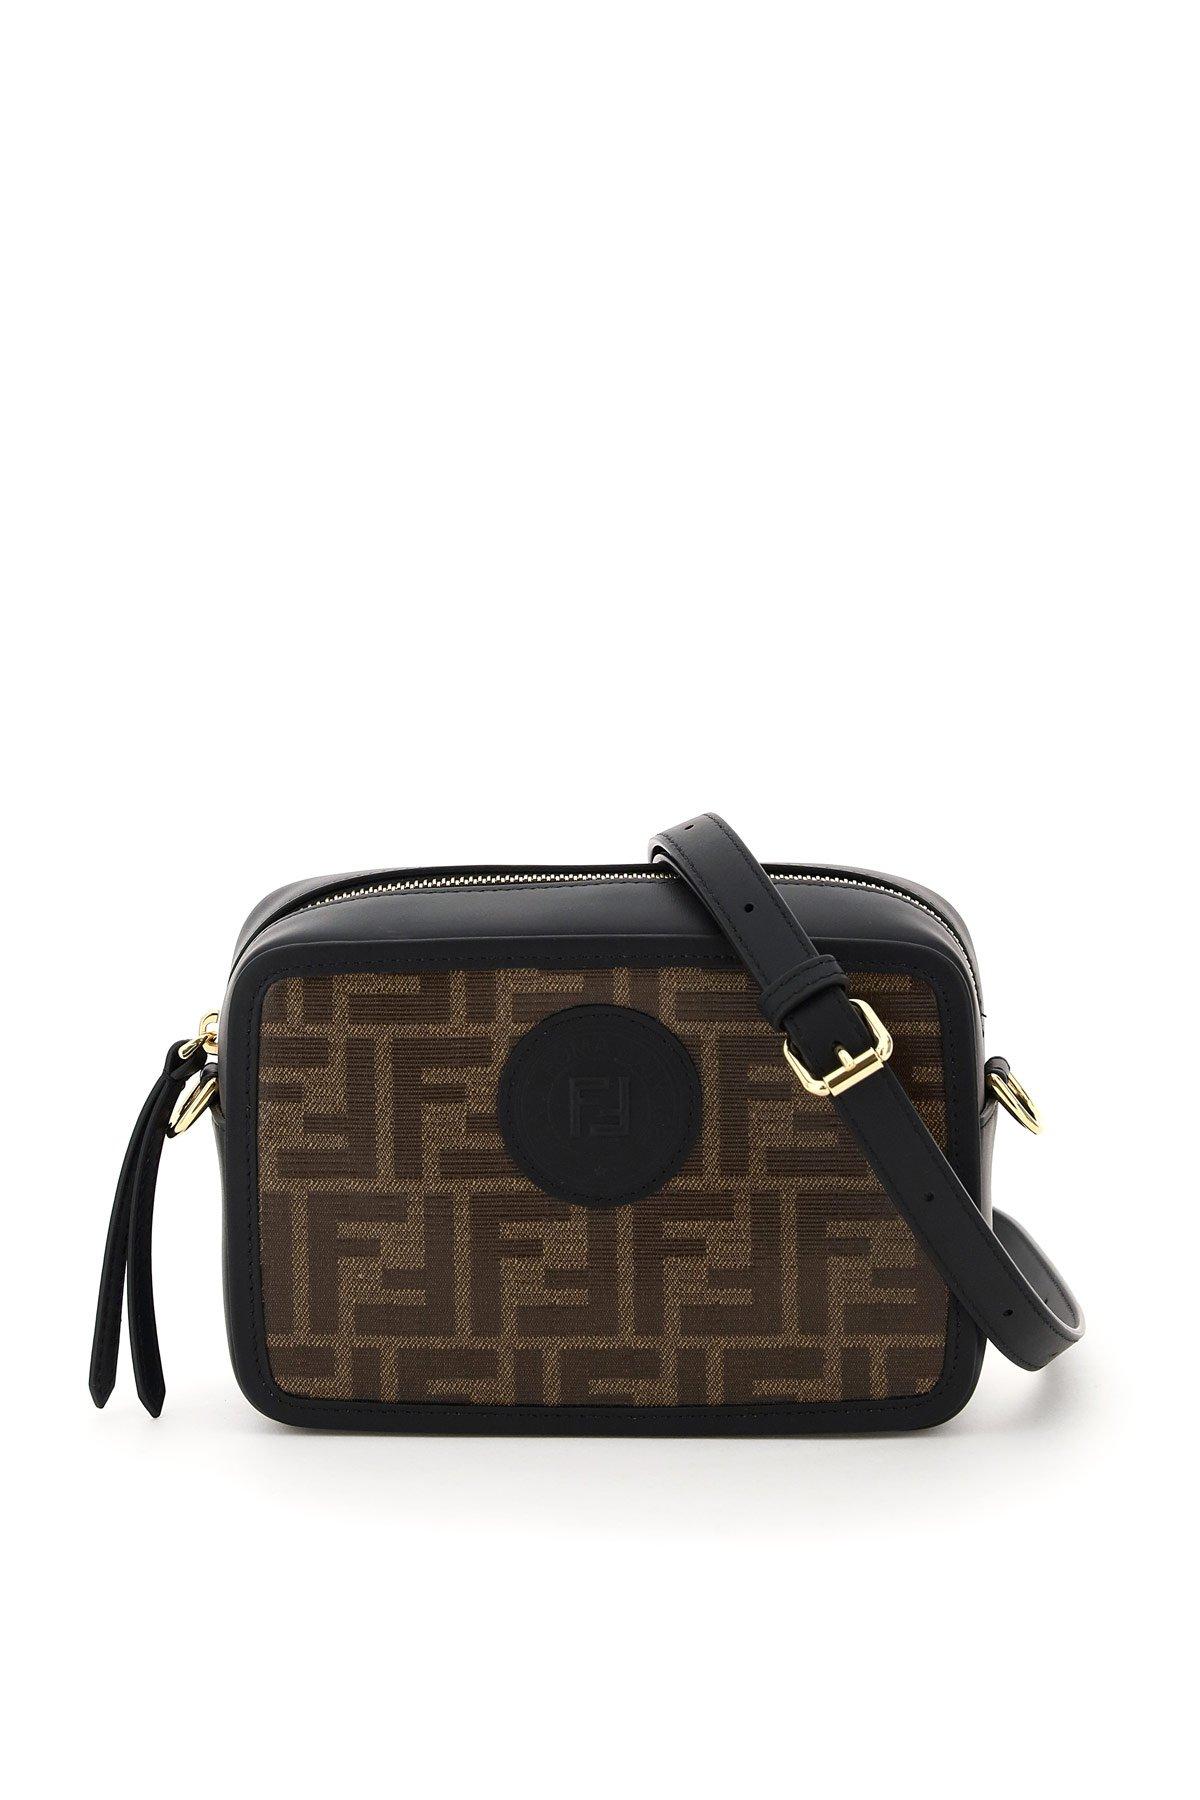 Fendi Leather Mini Camera Case Crossbody Bag in Brown - Lyst